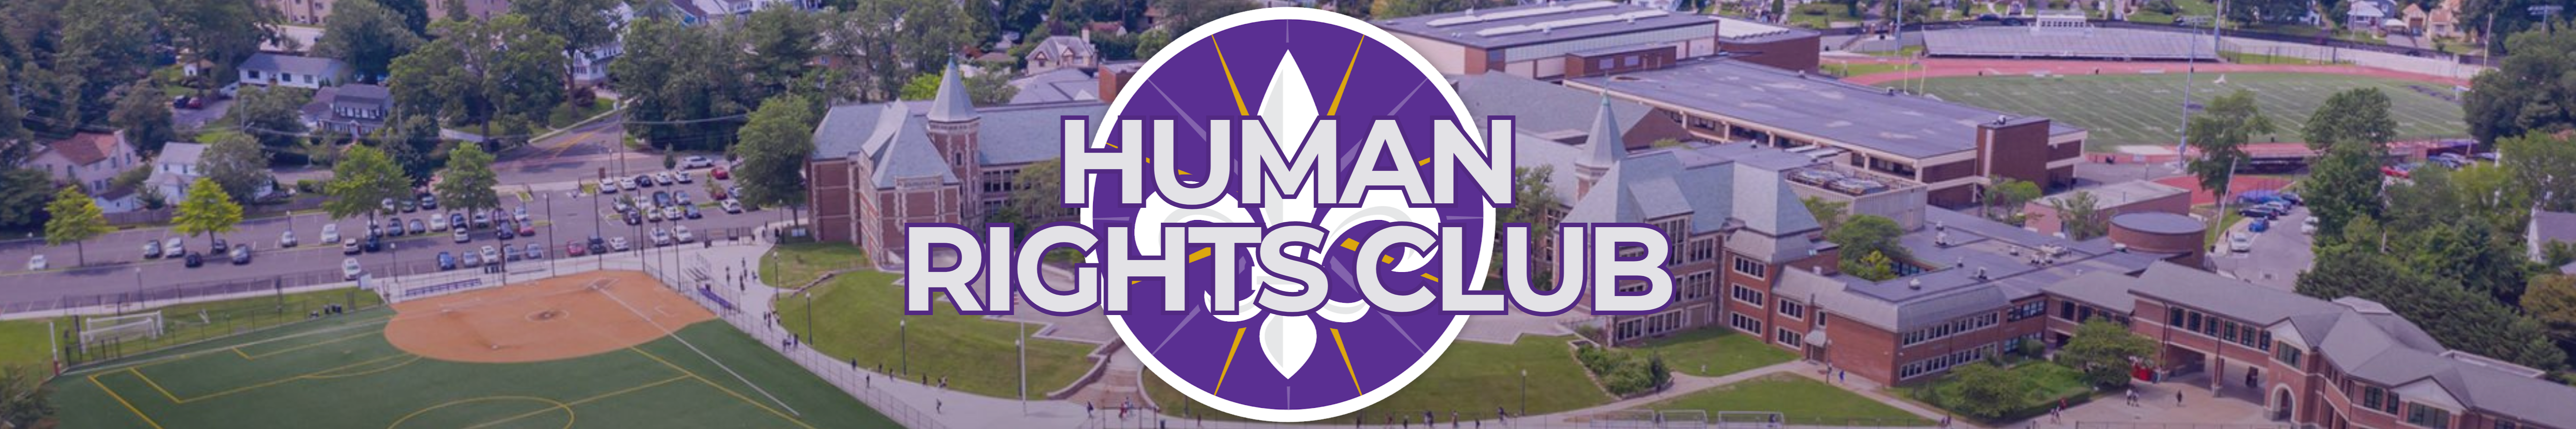 Human Rights Club banner